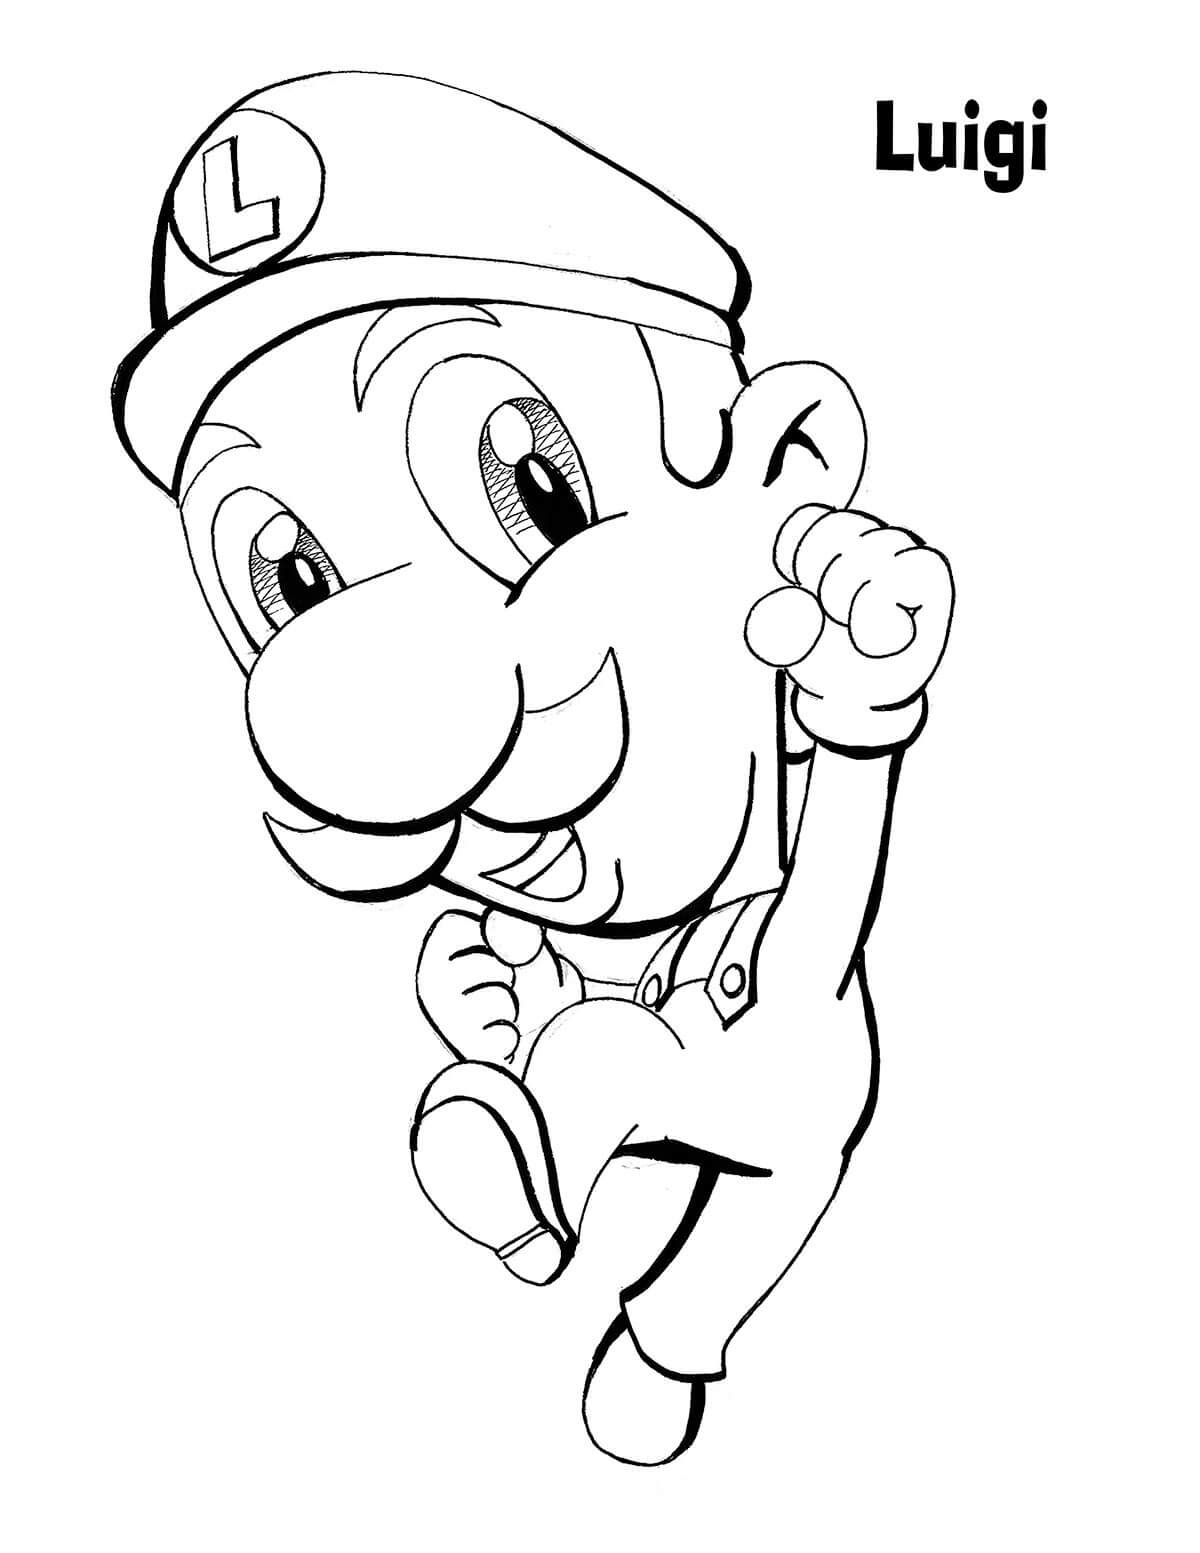 Dibujos de Divertido Luigi Saltando para colorear